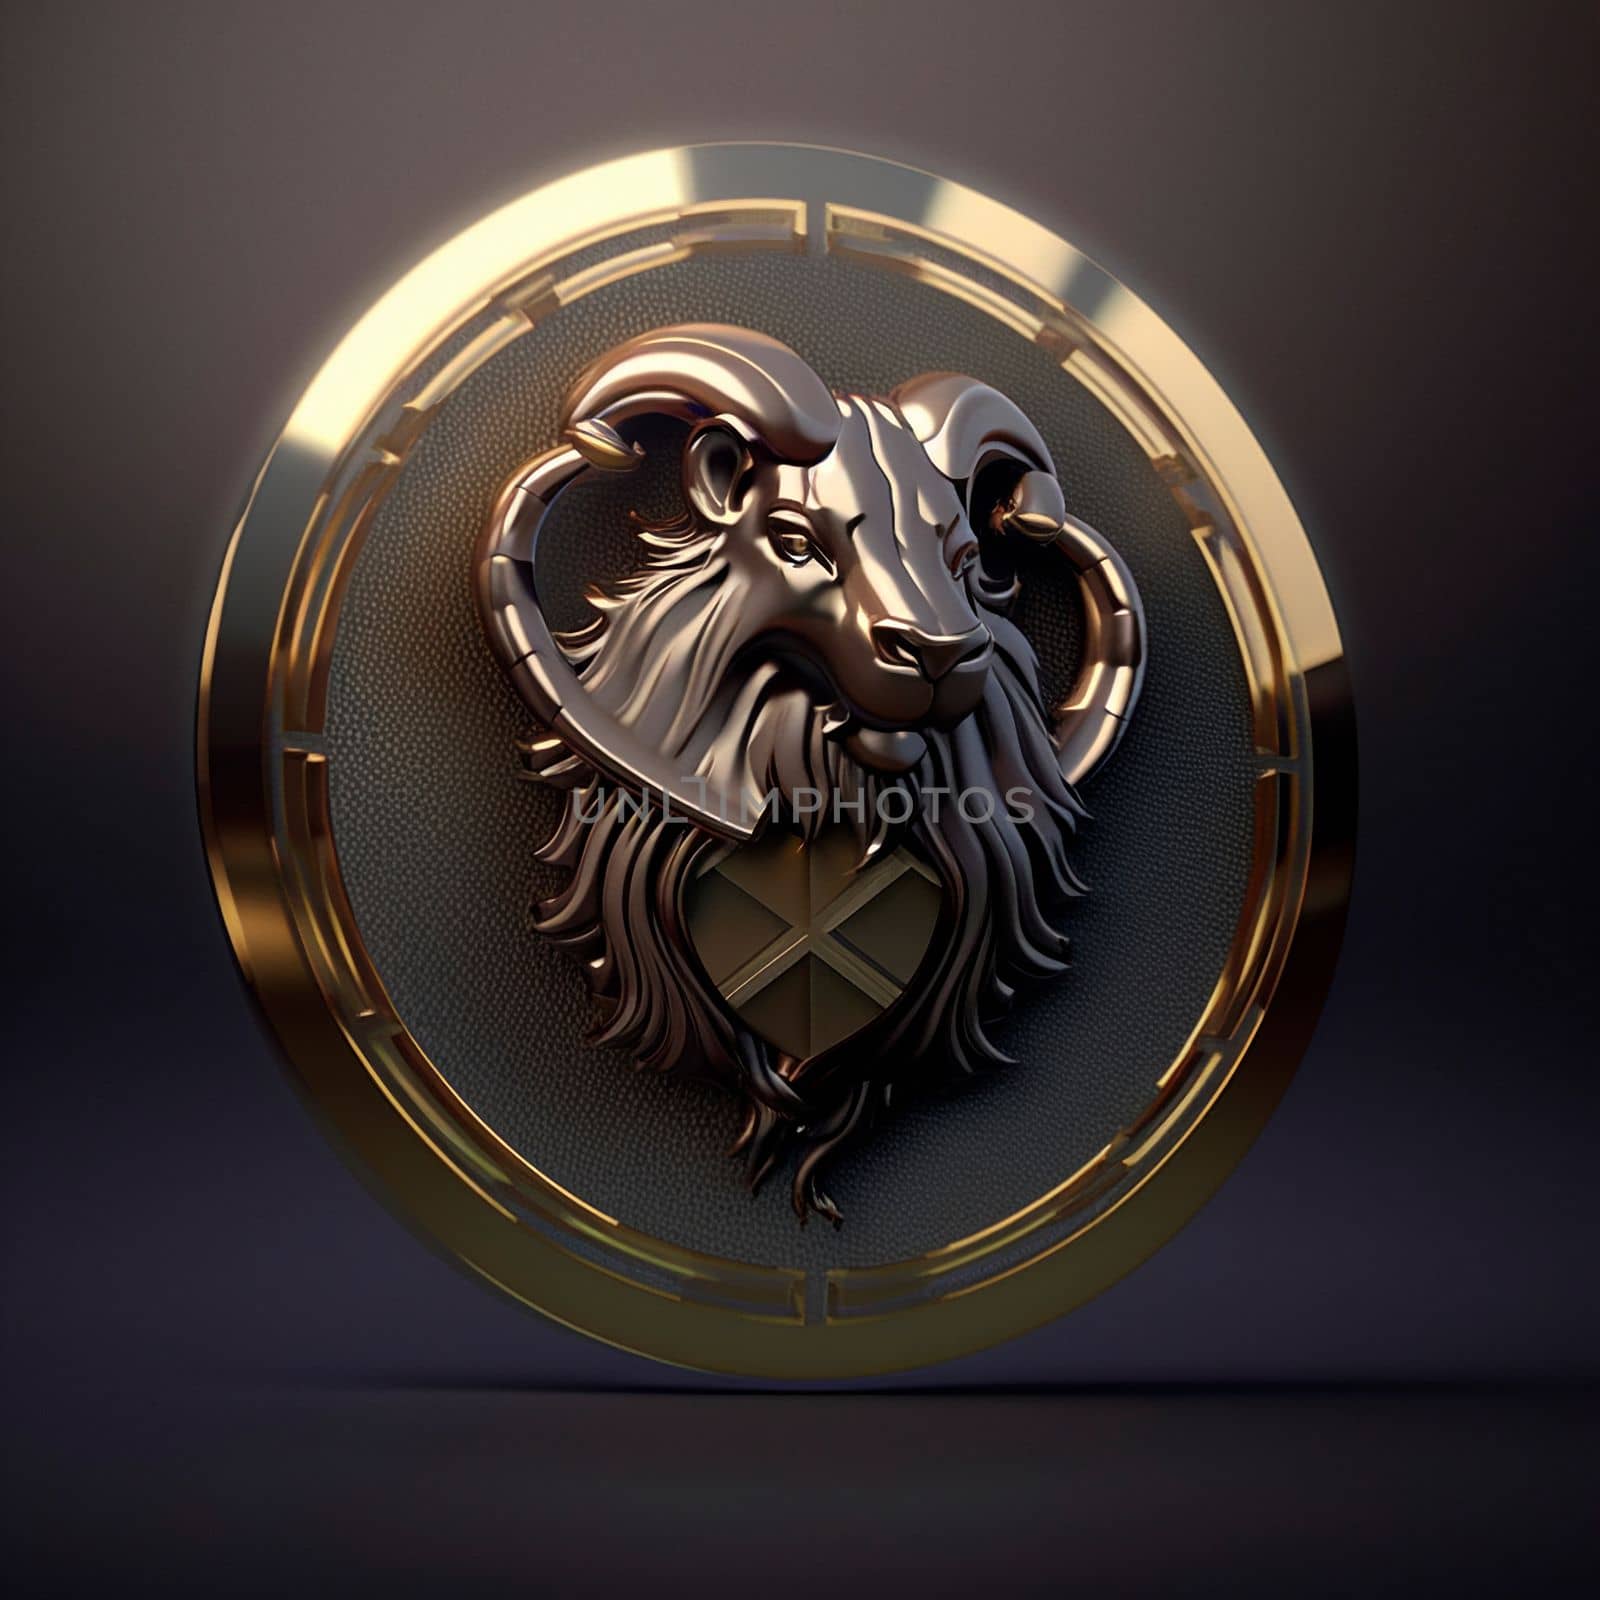 animal logo on a metal token. High quality illustration